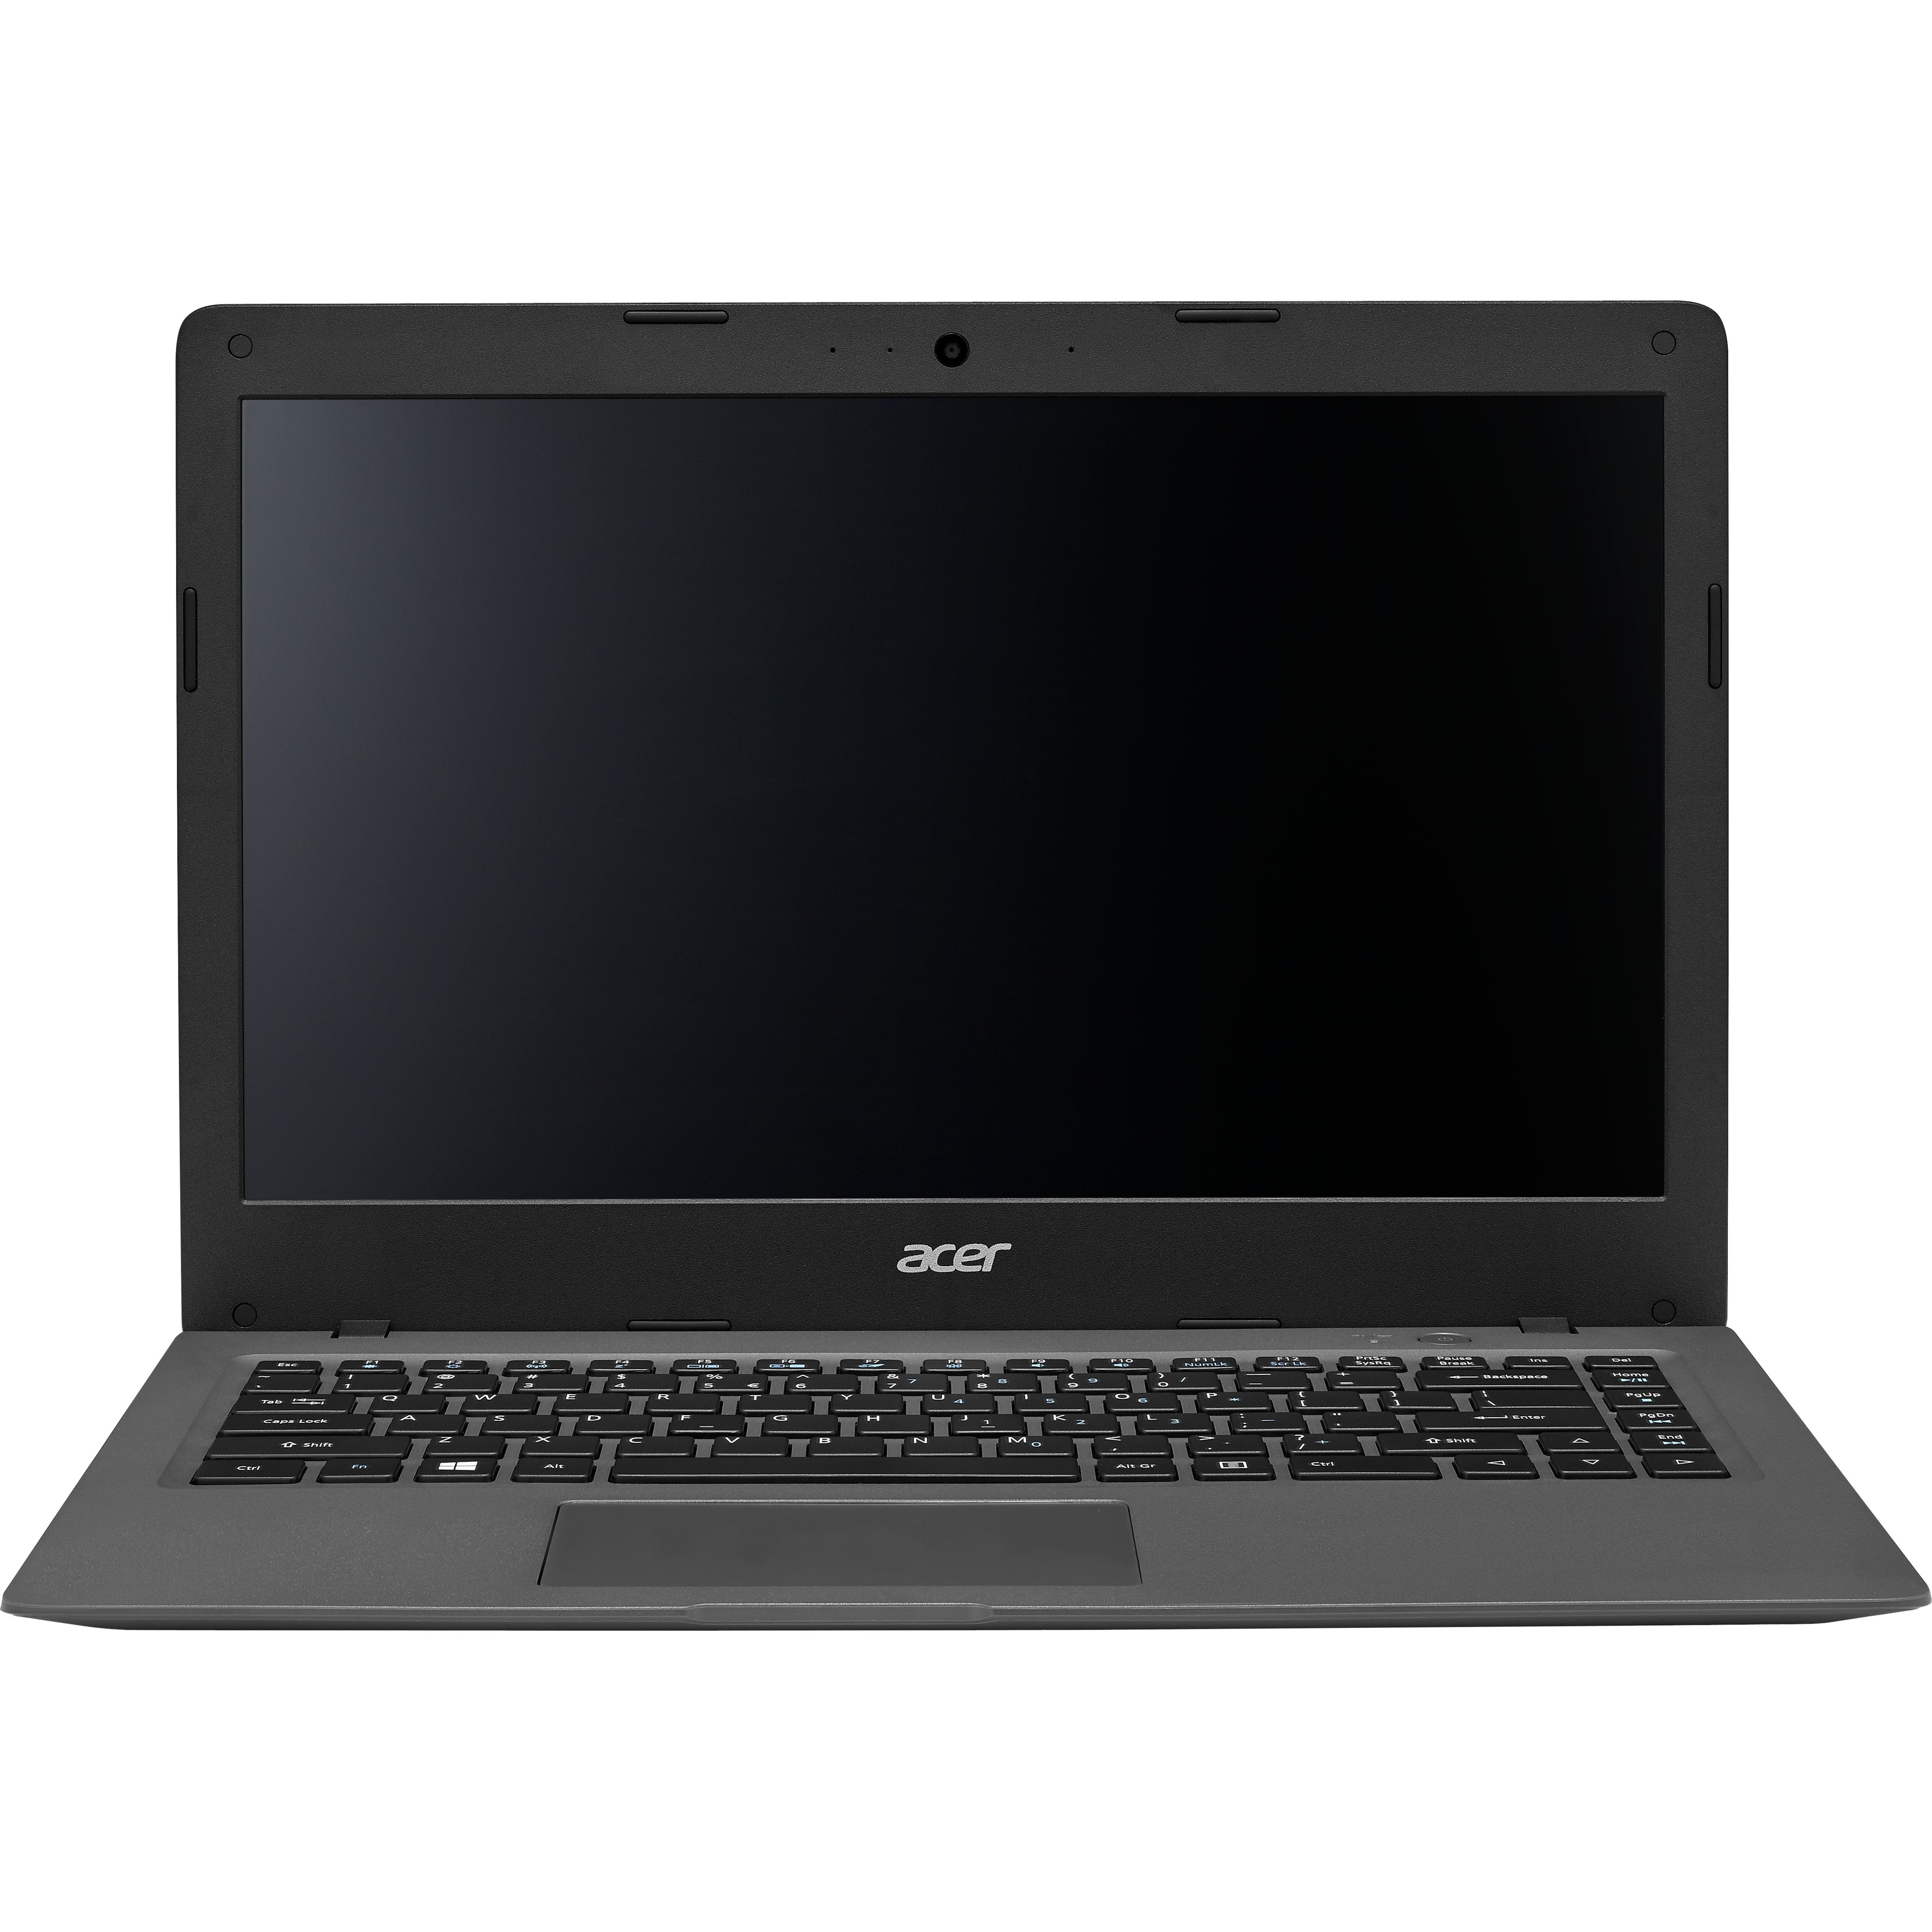 Aspire es1 533. Acer Aspire es1-533. Ноутбук Acer Aspire e5-772g-57dl. Ноутбук Acer Aspire es1-431-c67k. Acer Aspire es1-533-p4zp.